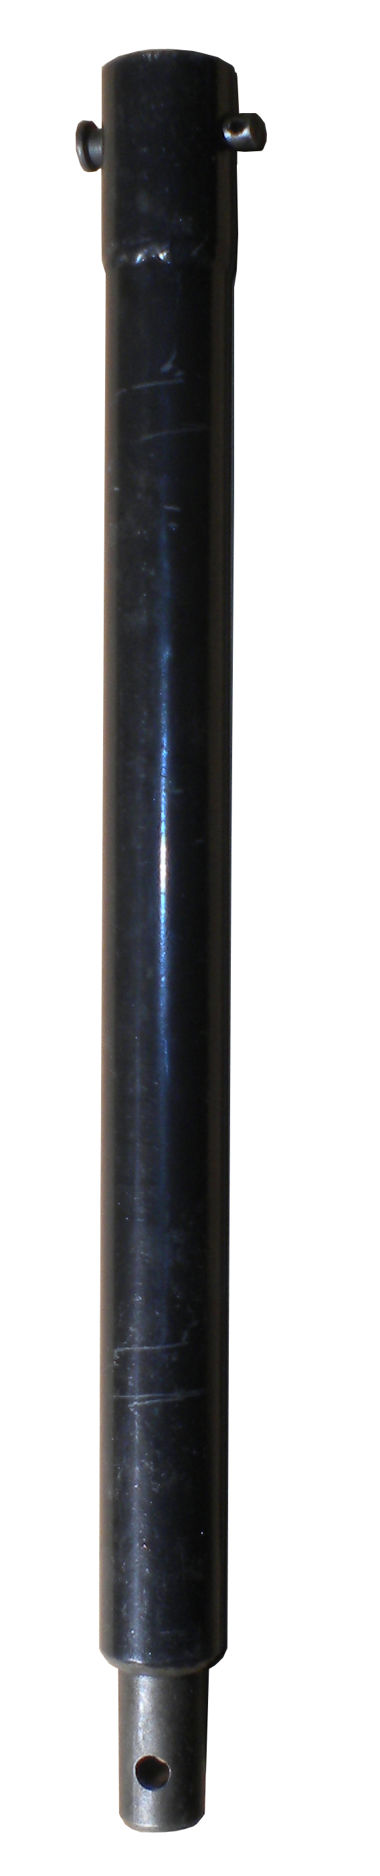 Drill extension 50cm / 